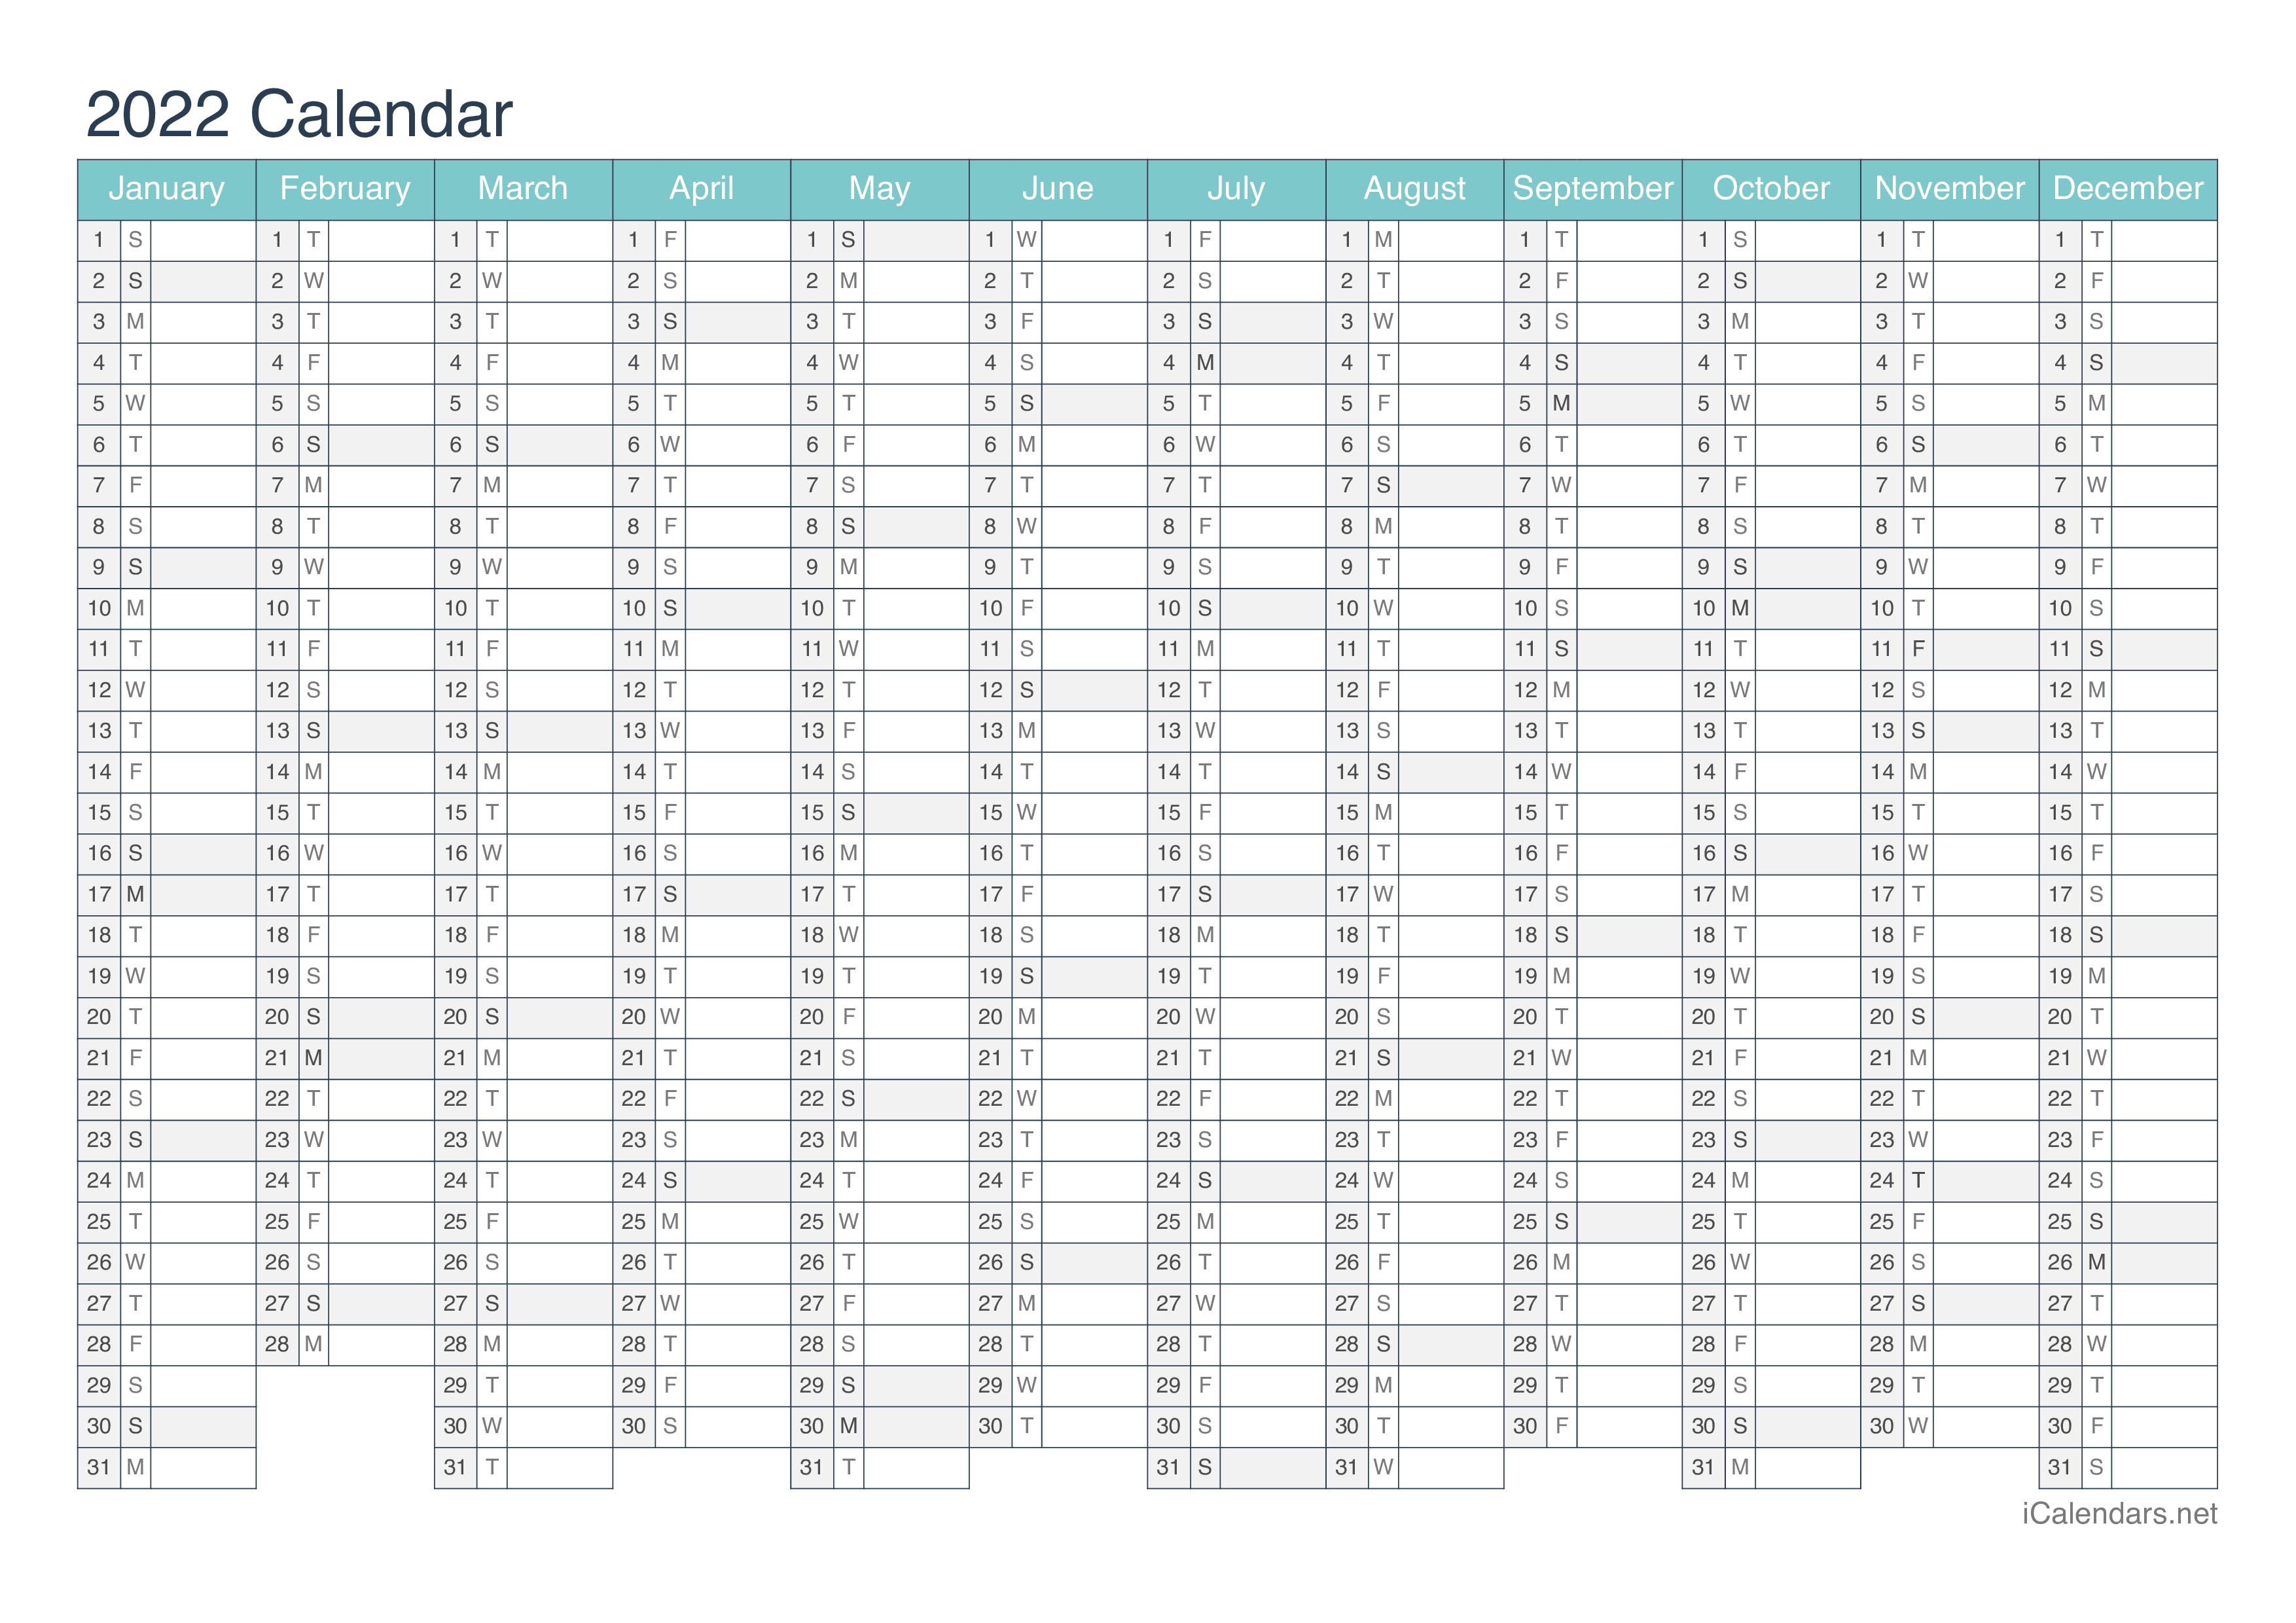 Fedex Holiday Calendar 2022 2022 Printable Calendar - Pdf Or Excel - Icalendars.net